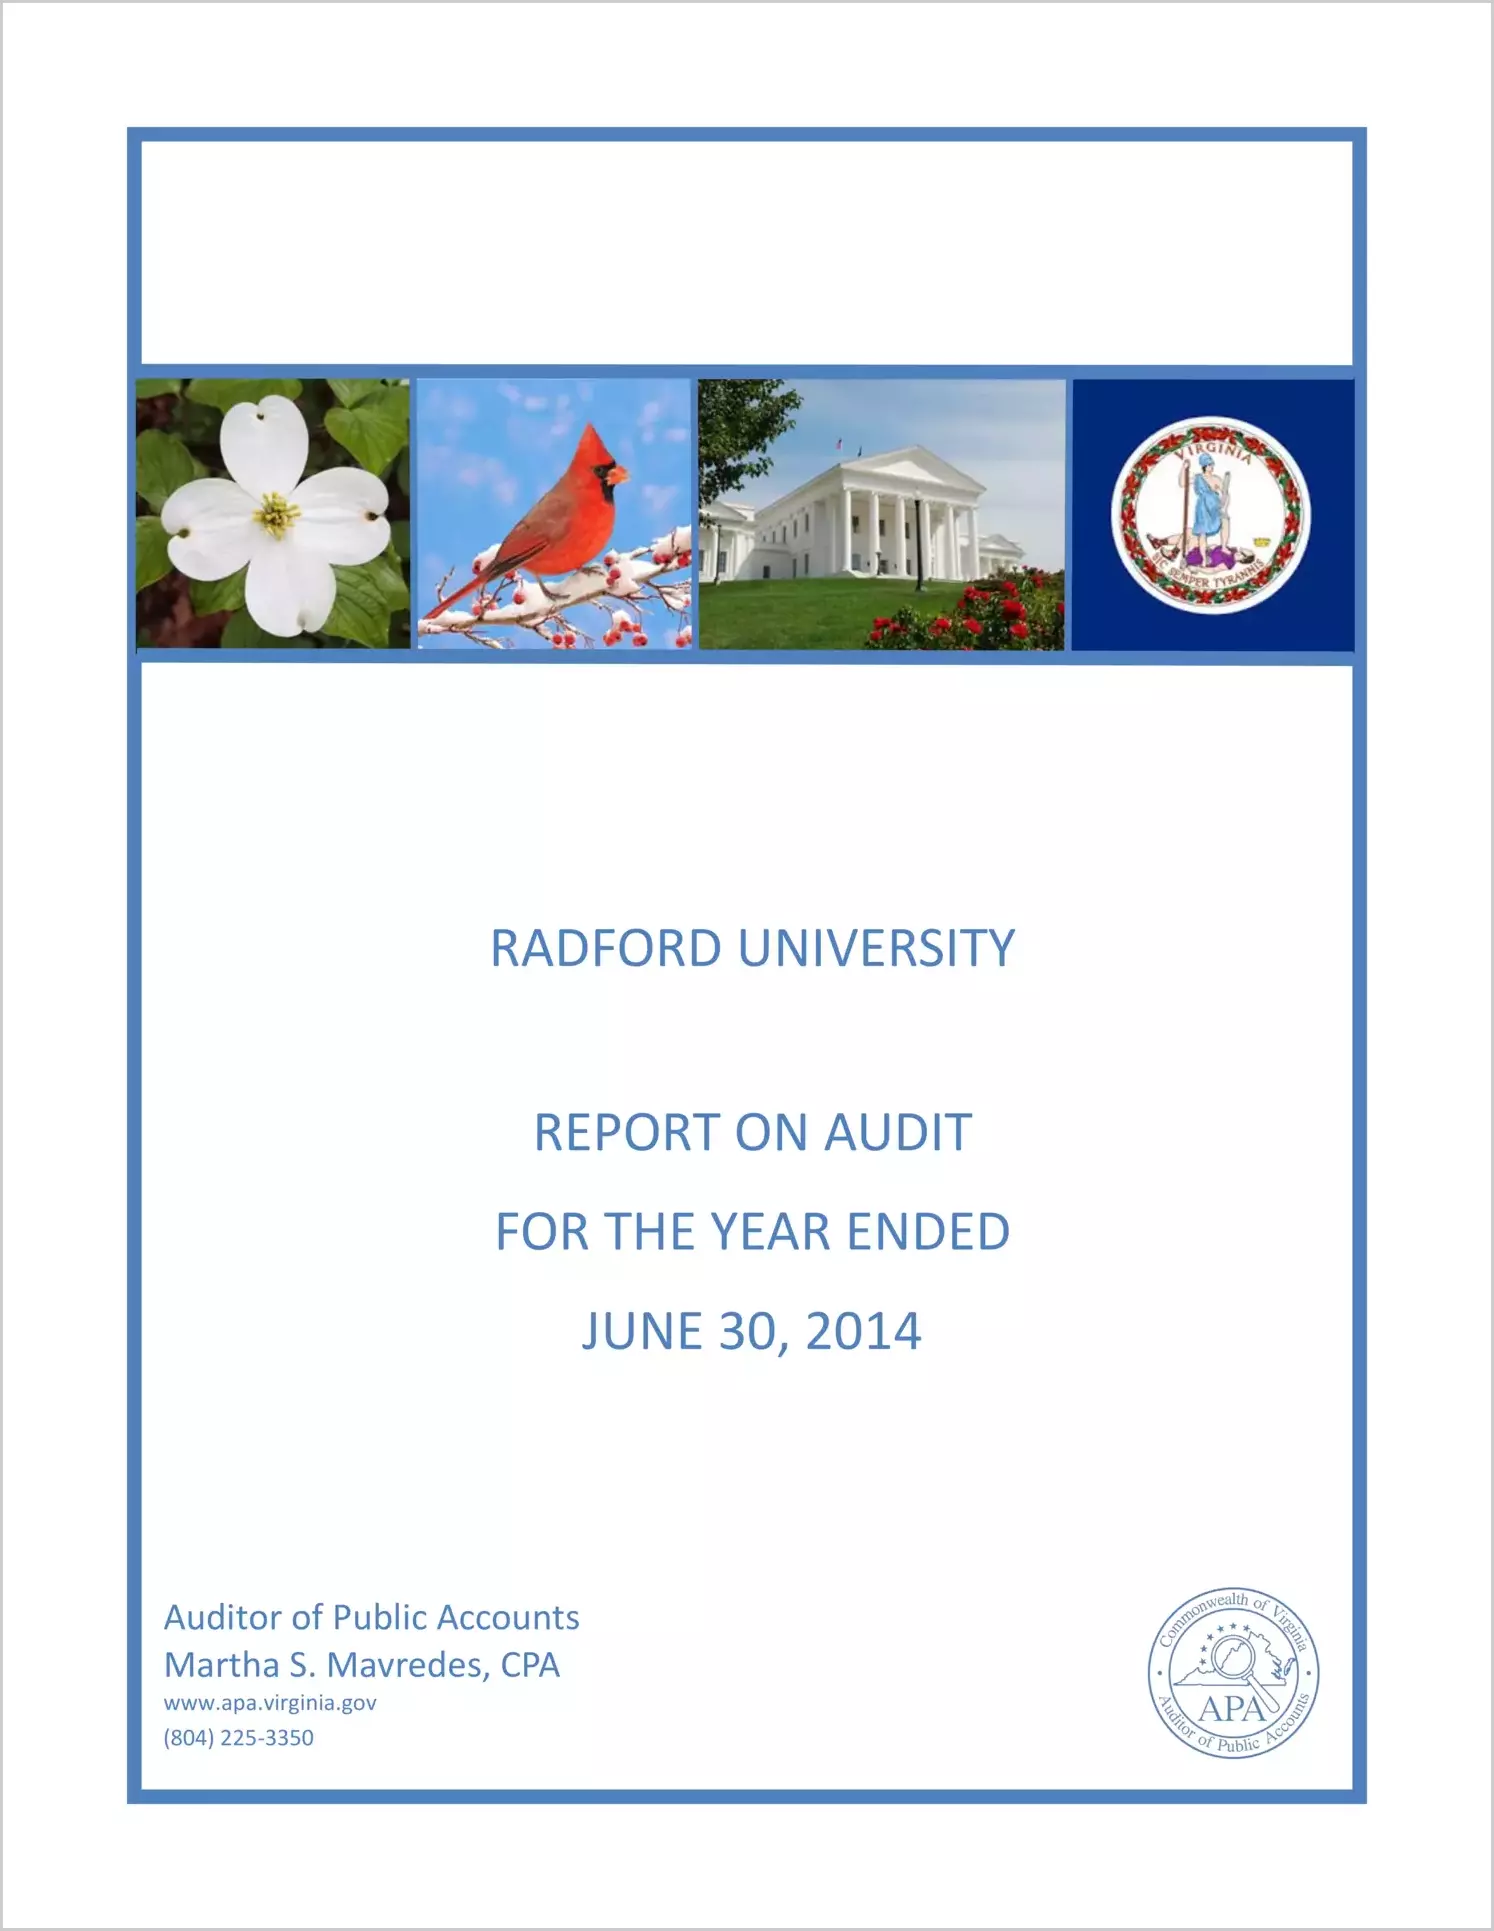 Radford University report on audit for the year ending June 30, 2014